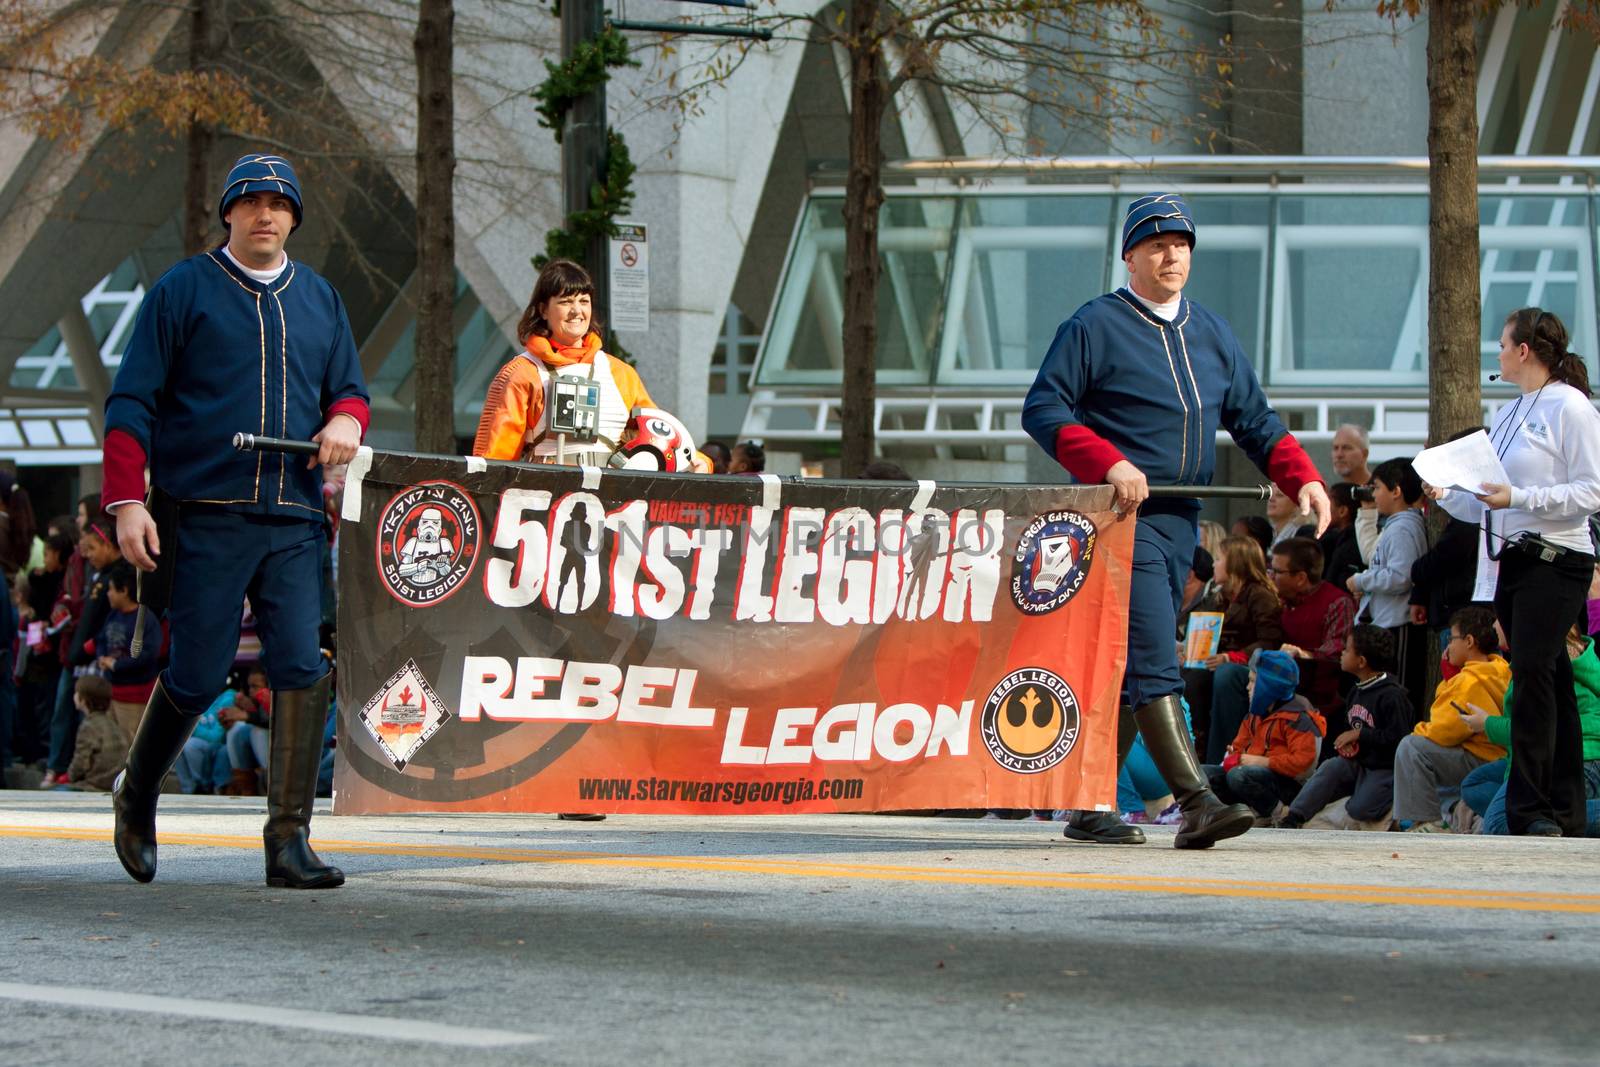 Atlanta, GA, USA - December 1, 2012:  Members of the 501st Rebel Legion carry banner ahead of Star Wars characters taking part in the annual Atlanta Christmas parade in downtown Atlanta.